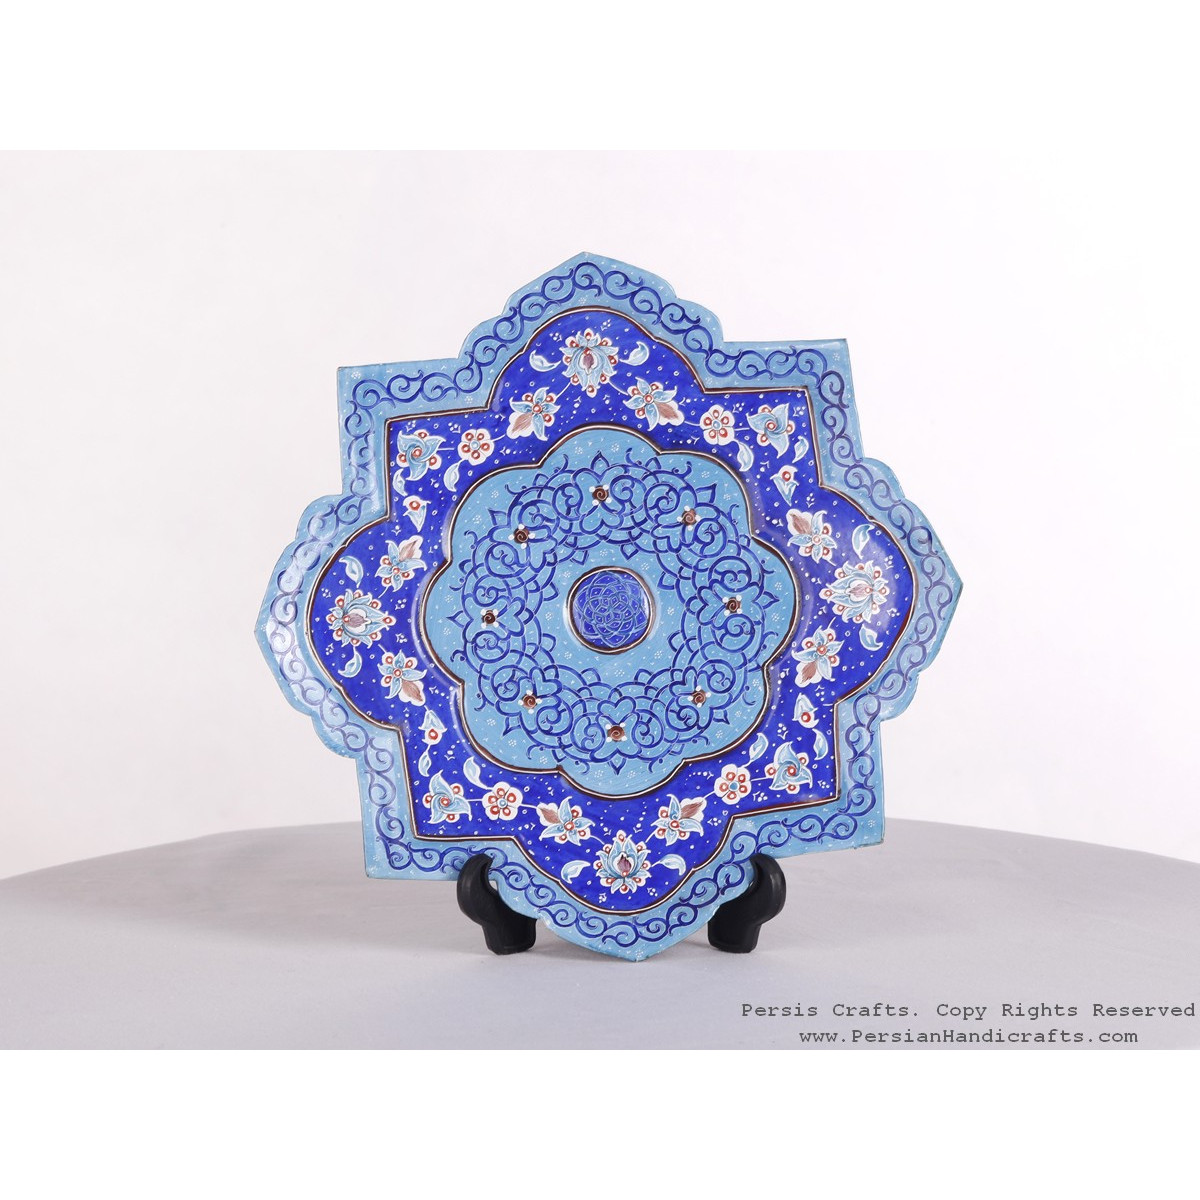 Enamel (Minakari) Wall Hanging Plate  - HE3601-Persian Handicrafts